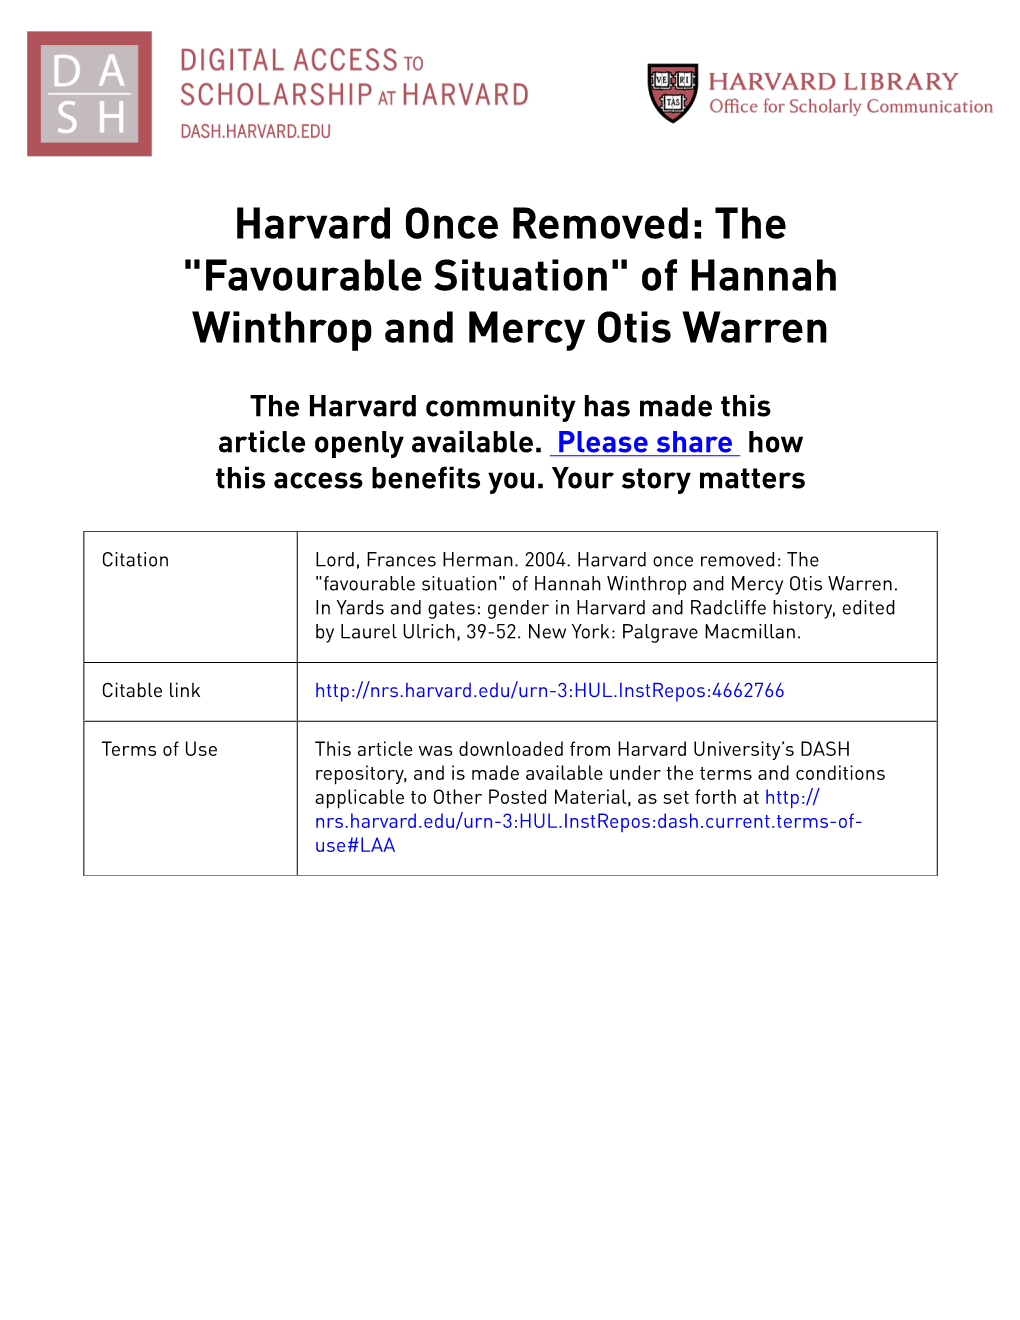 Hannah Winthrop and Mercy Otis Warren